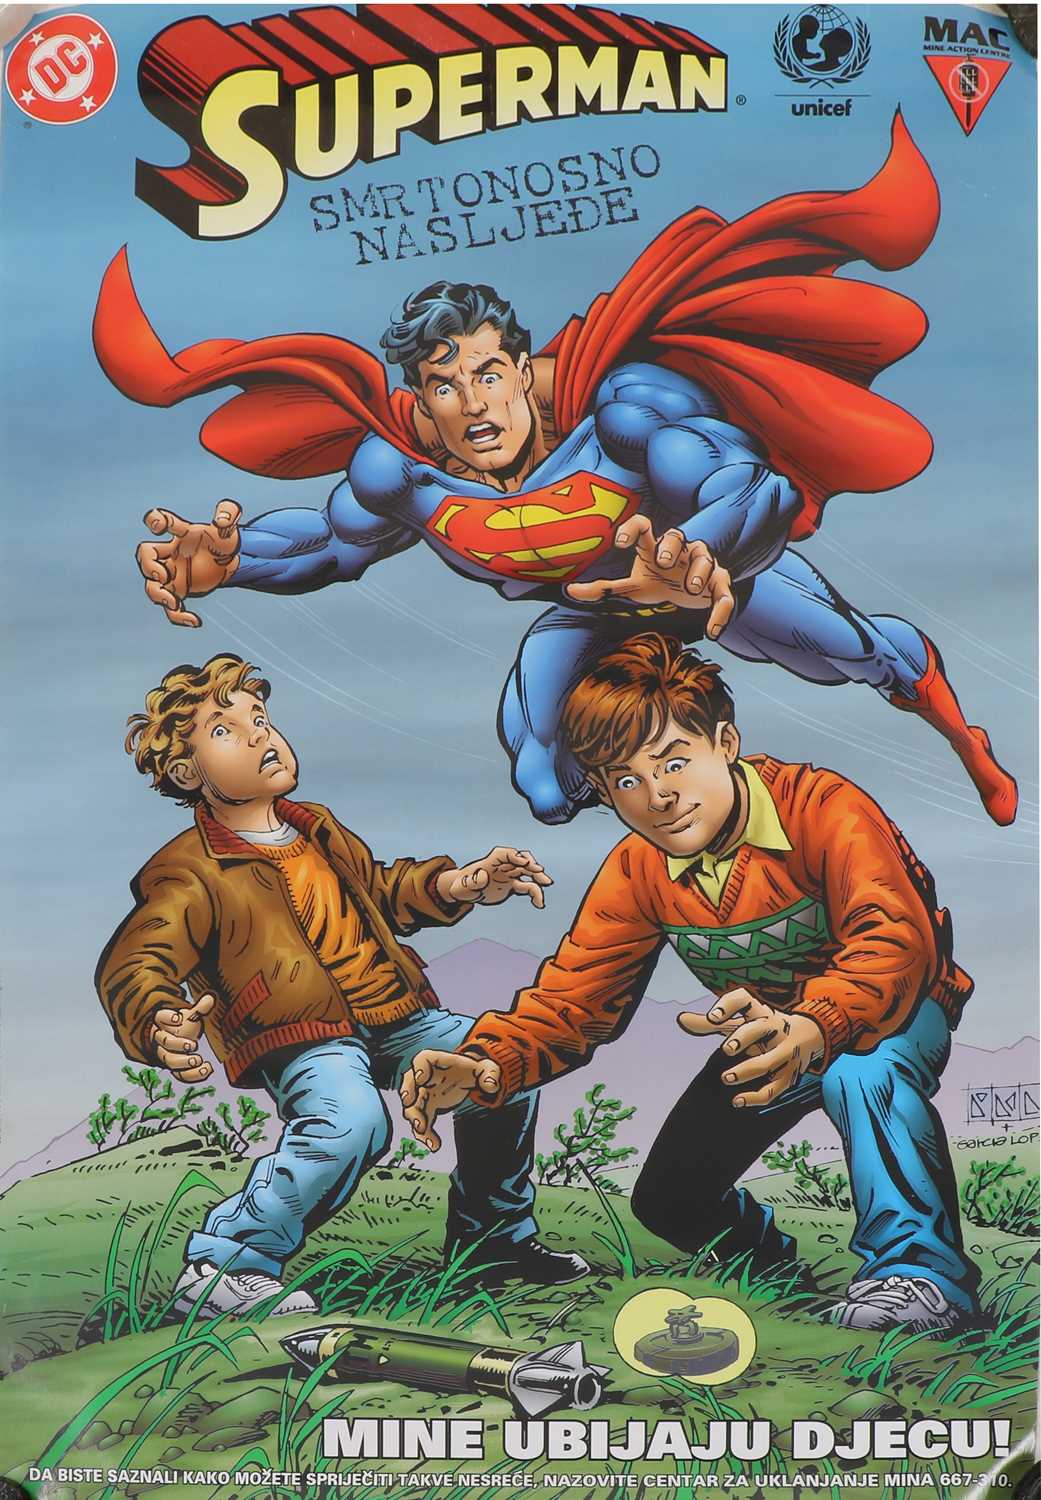 Superman mine awareness poster,